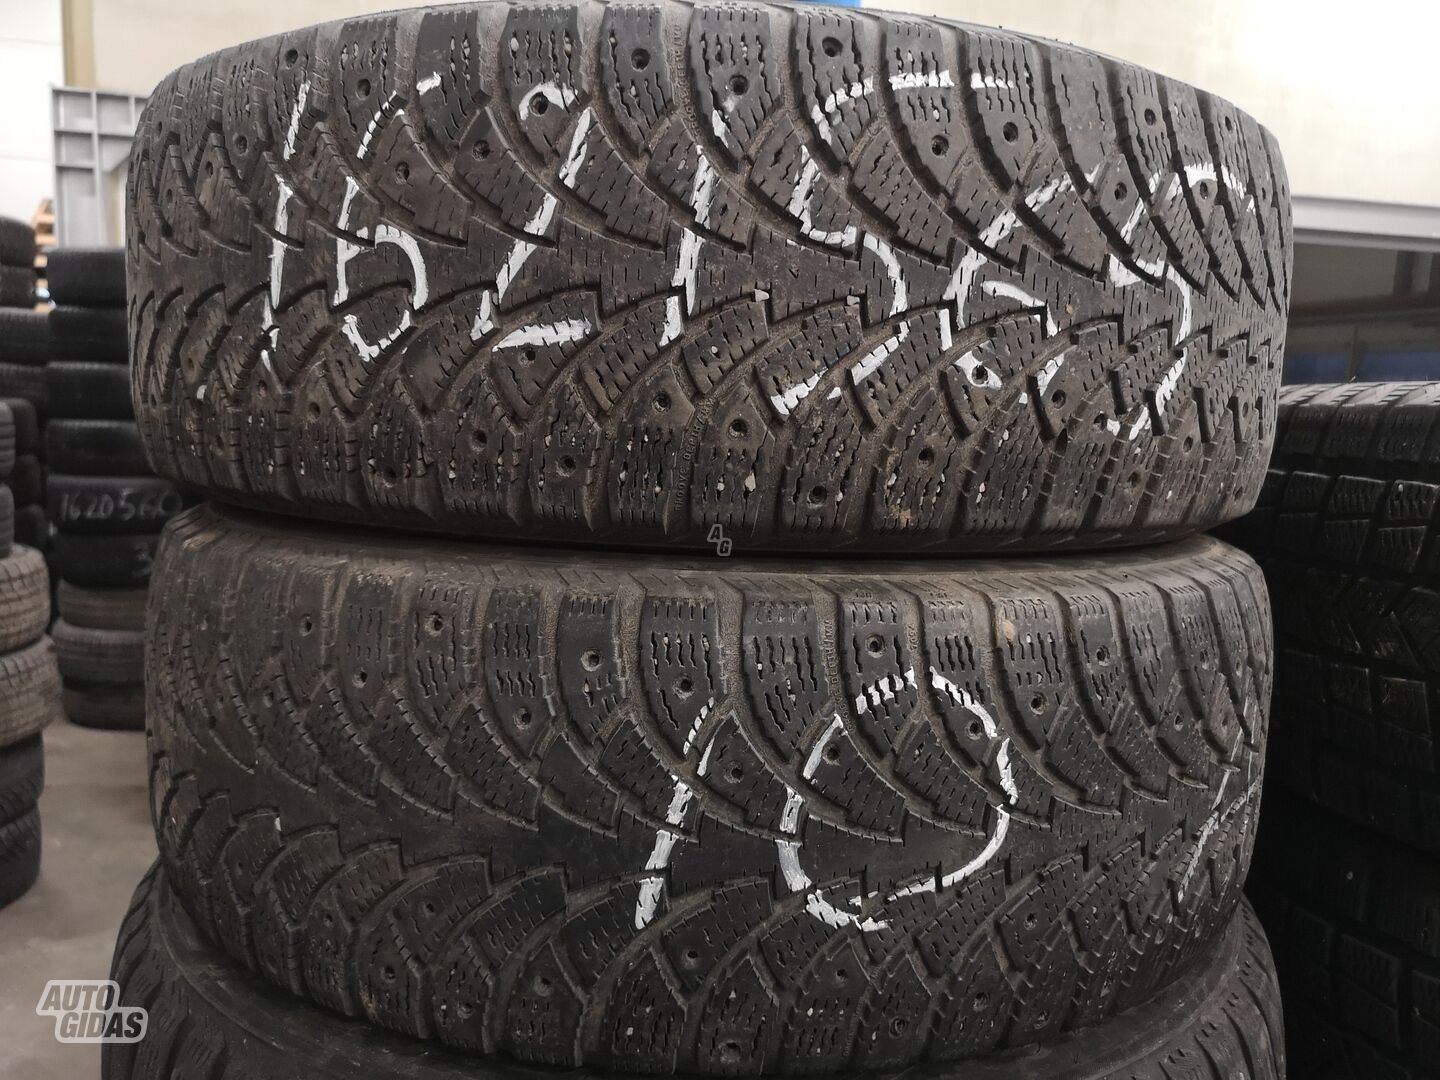 R16 winter tyres passanger car